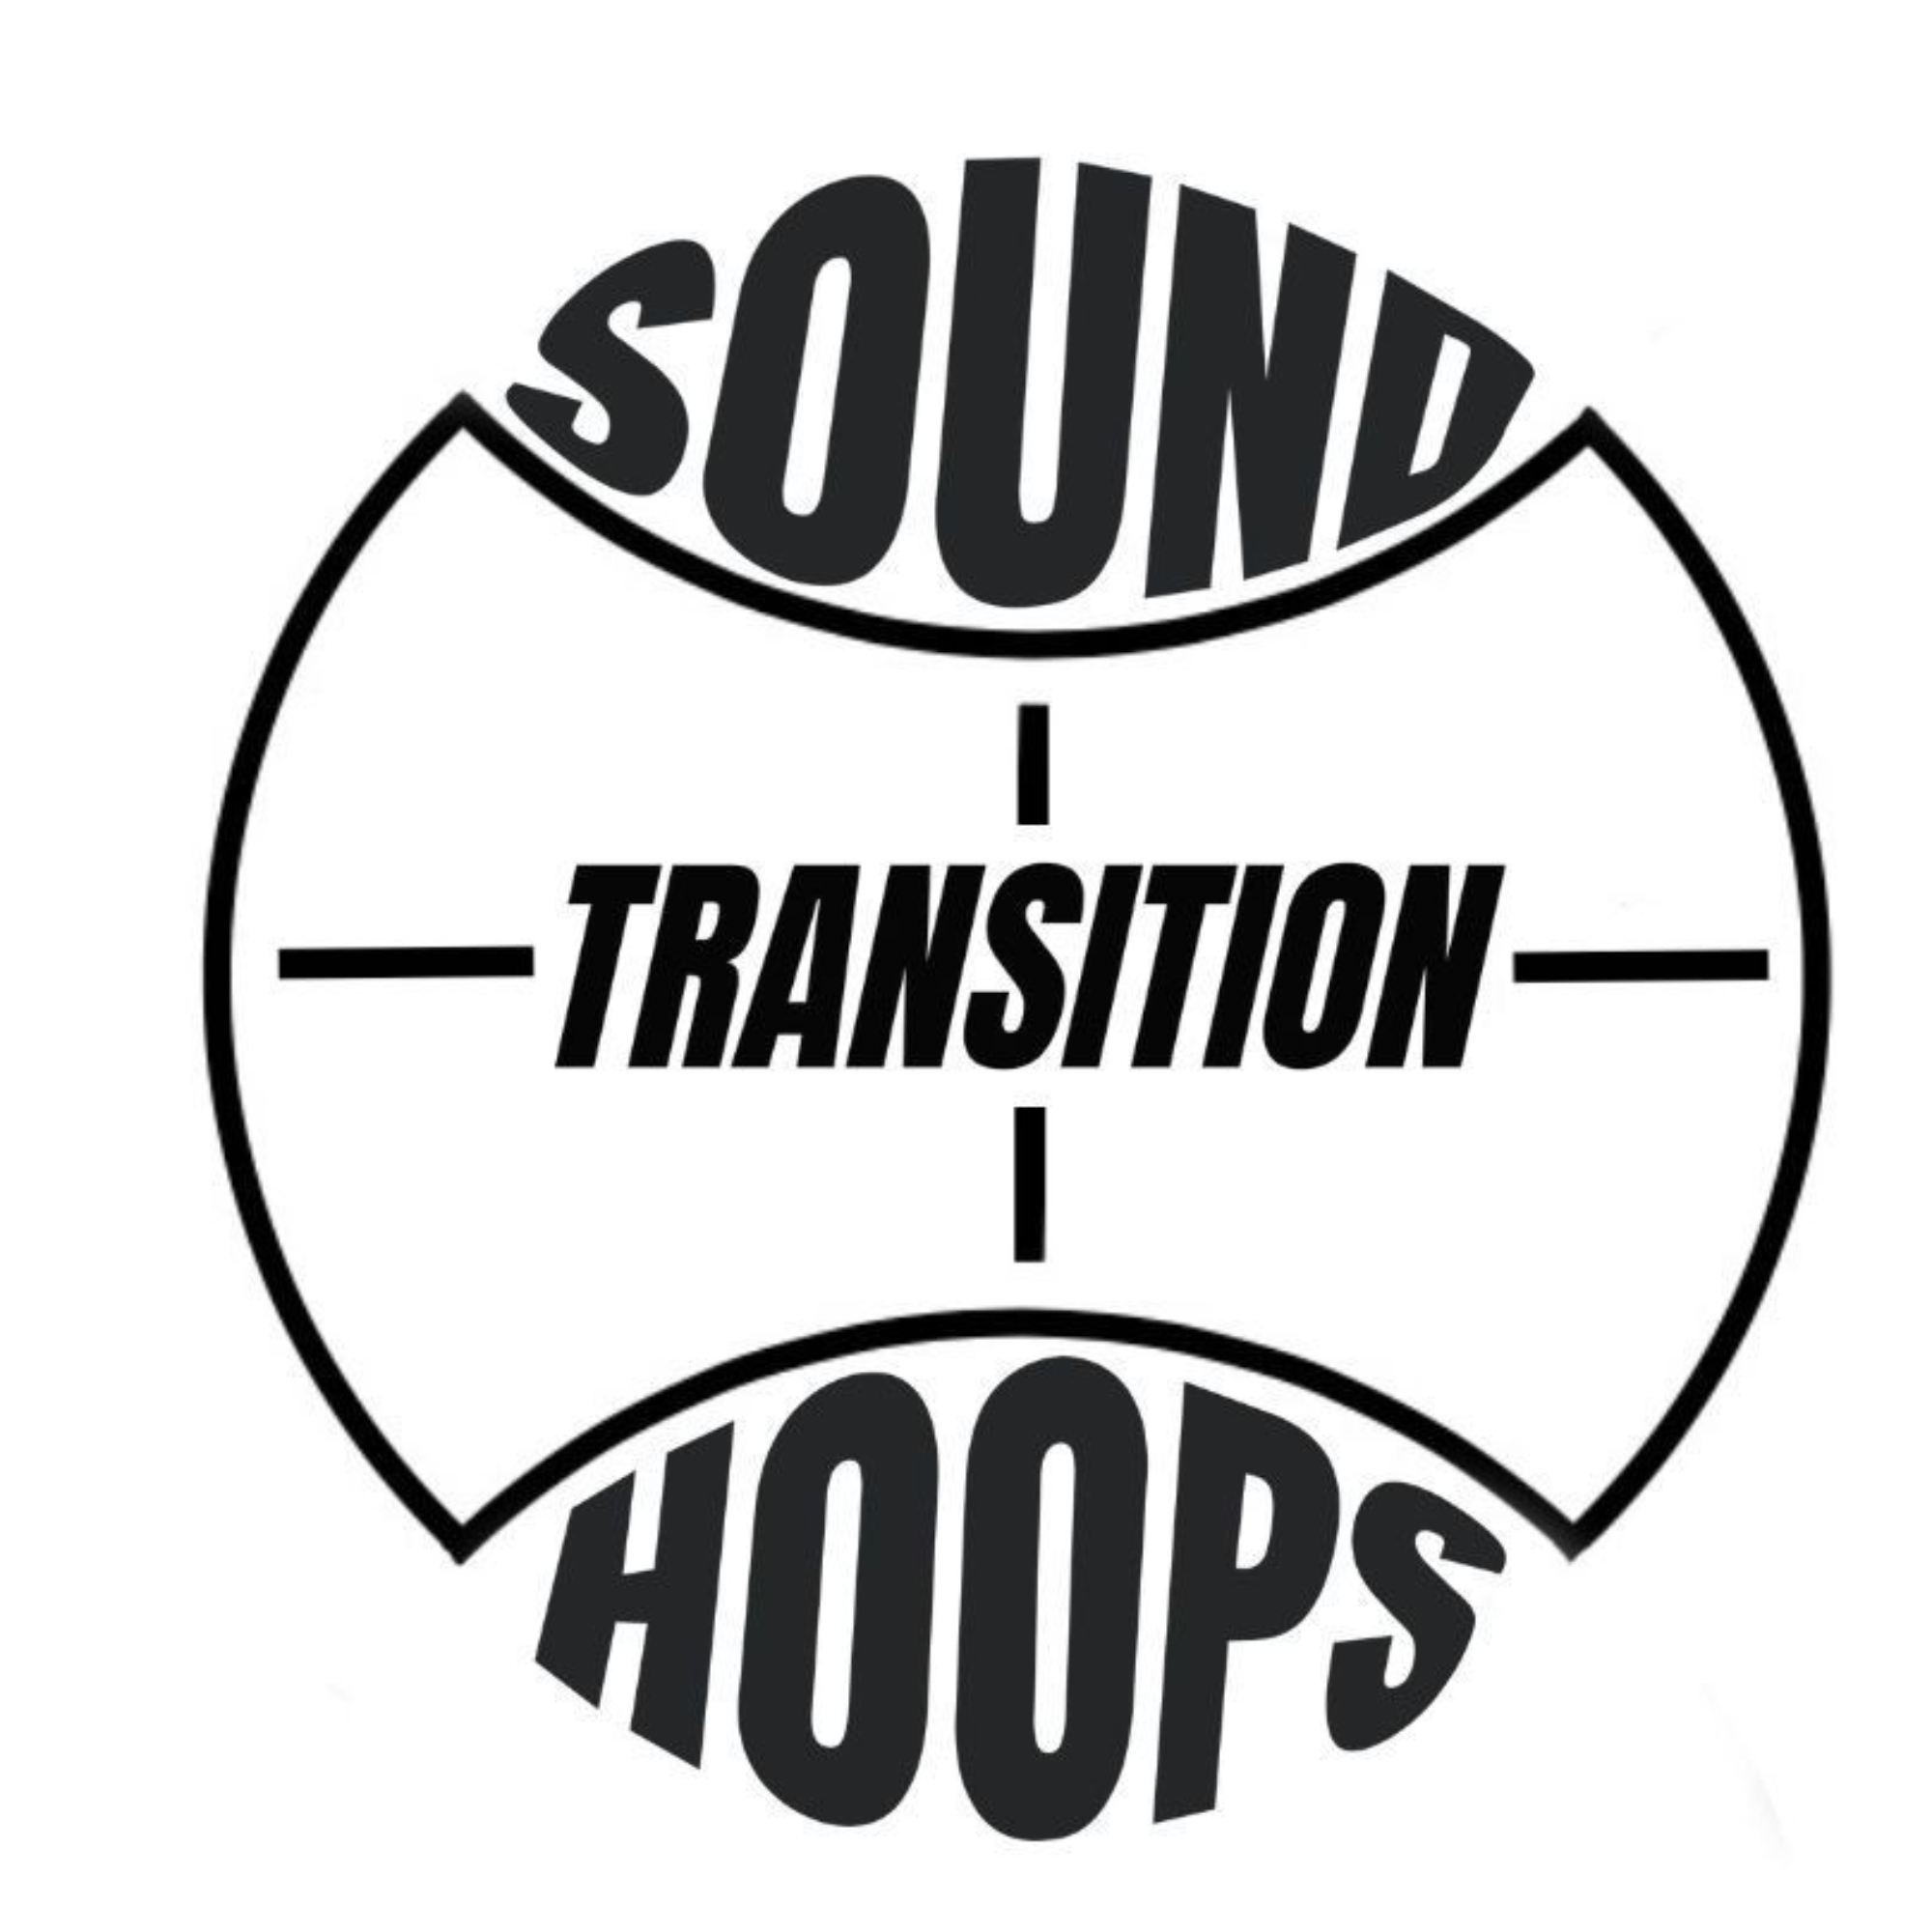 Organization logo for Sound Transition Hoops